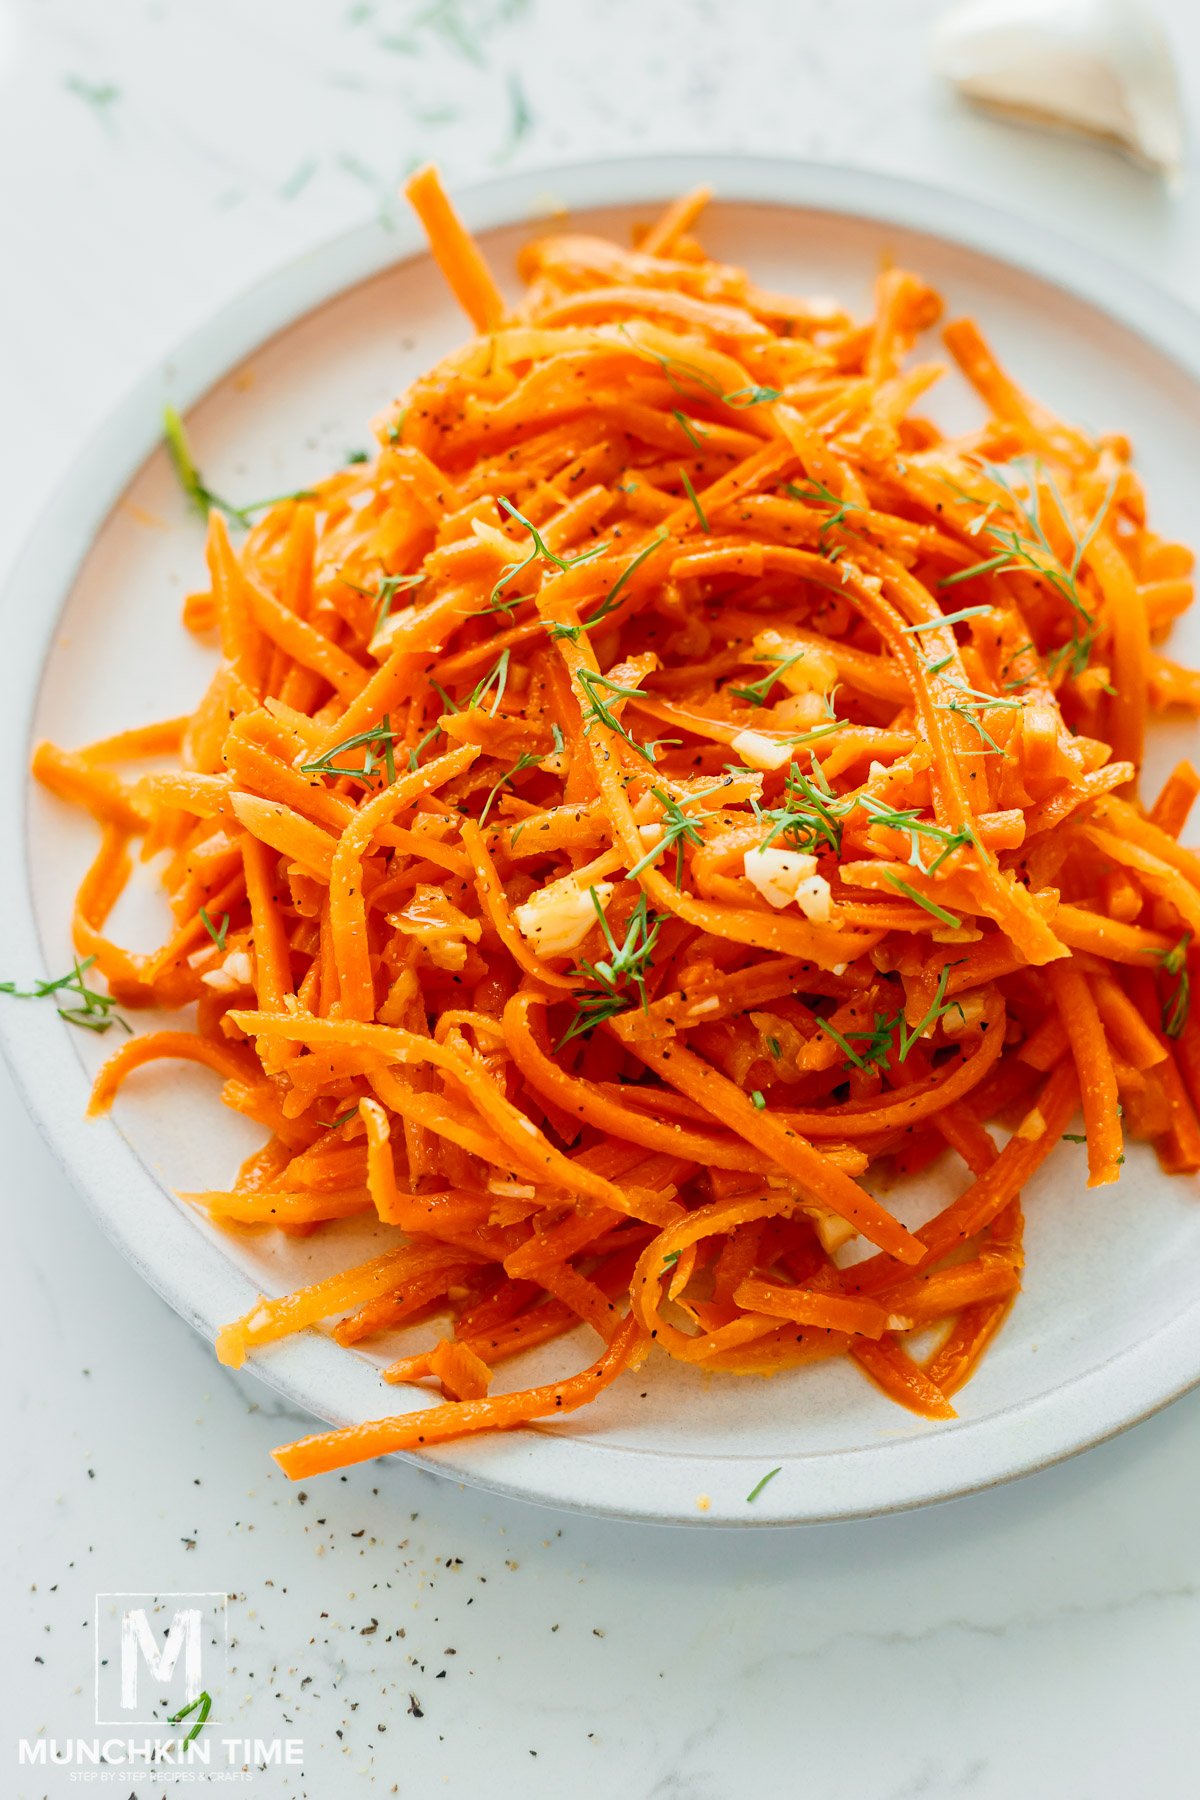 Carrot salad with garlic